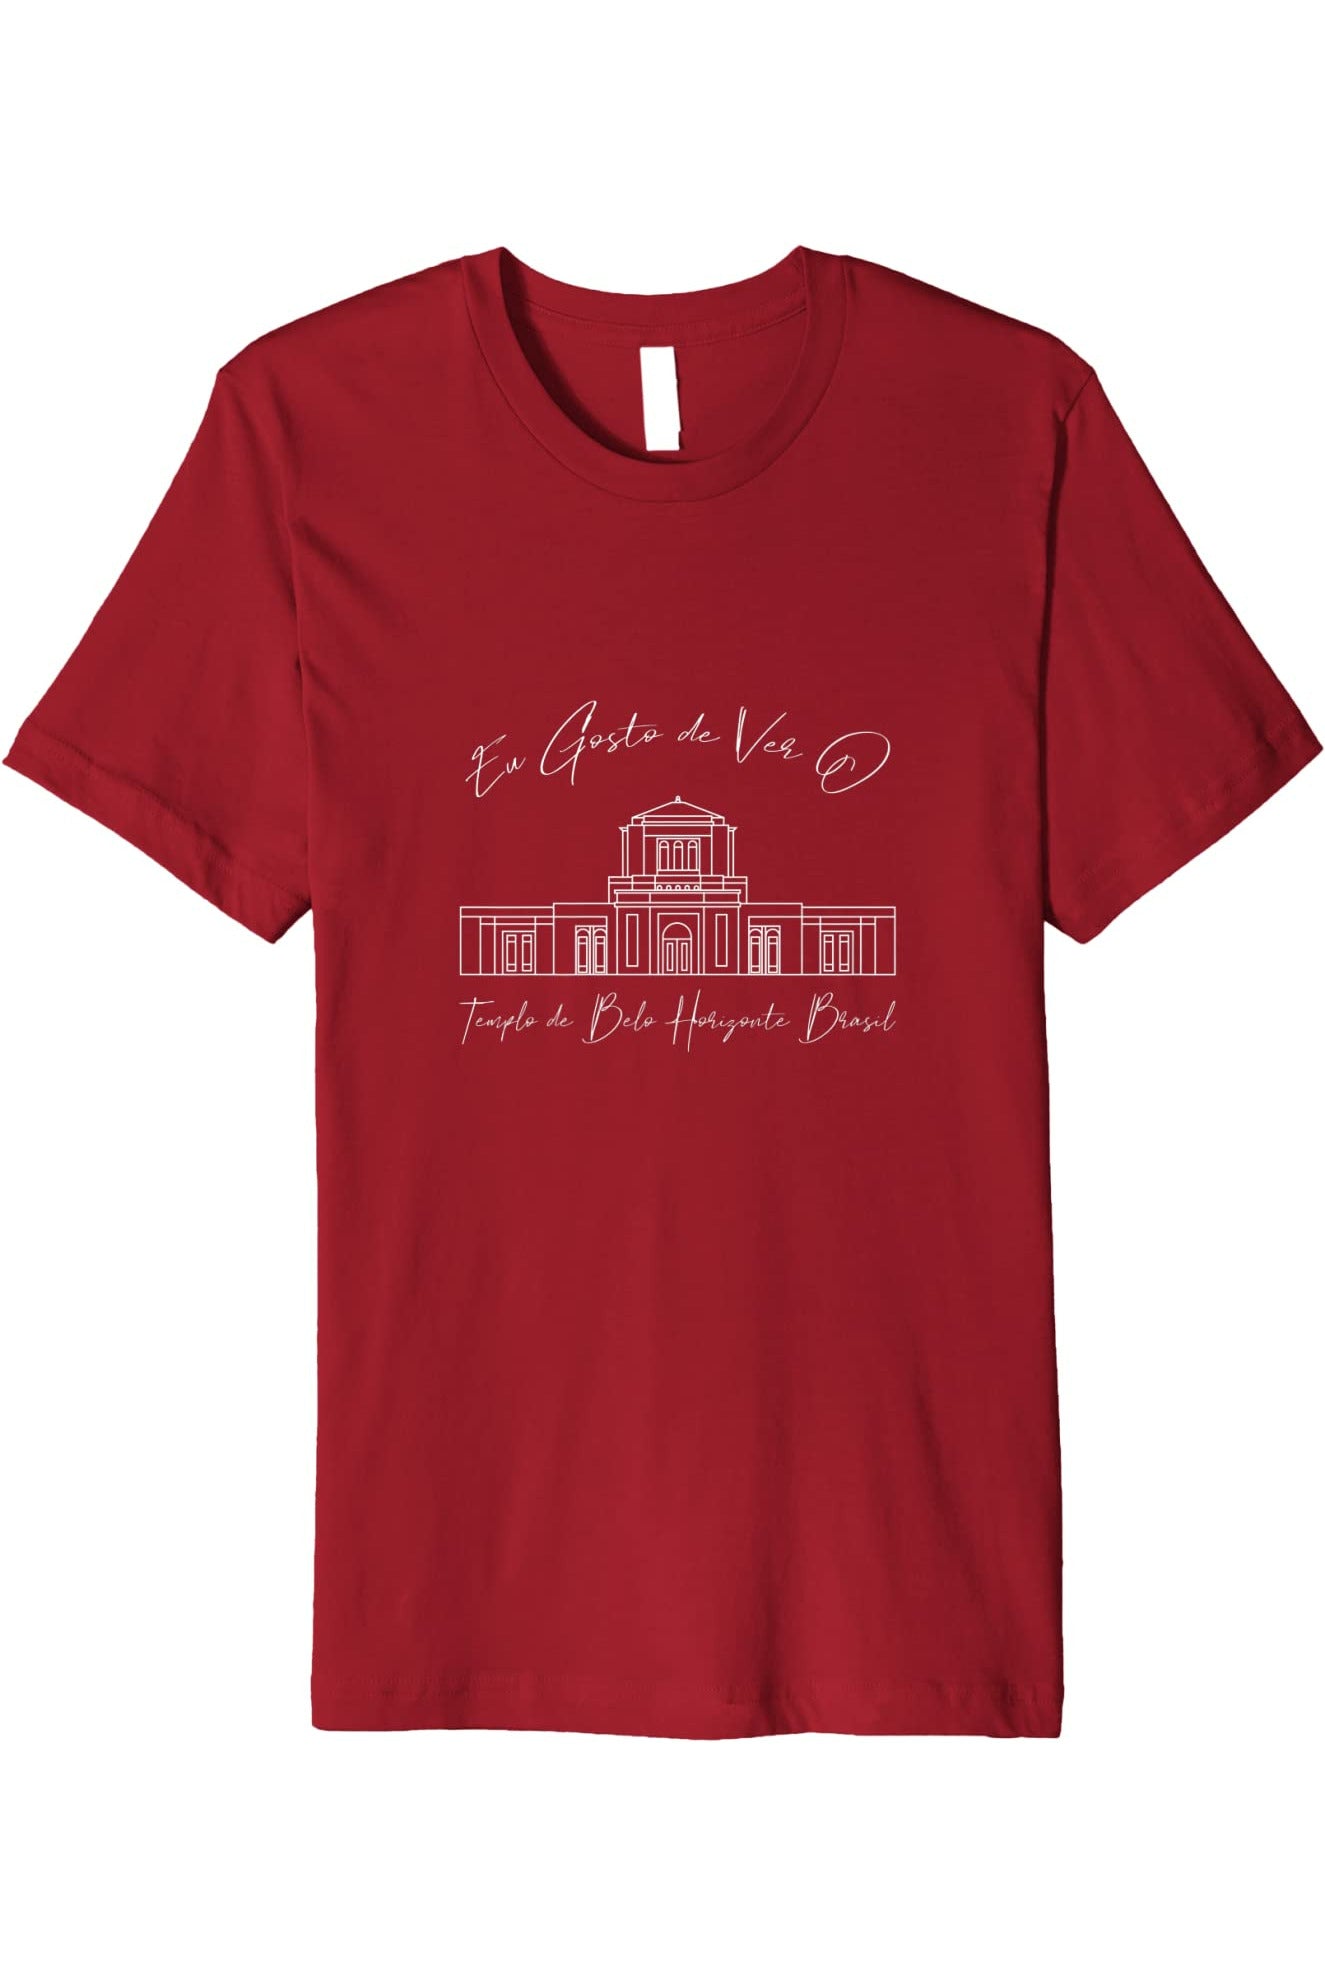 Belo Horizonte Brazil Temple T-Shirt - Premium - Calligraphy Style (Portuguese) US